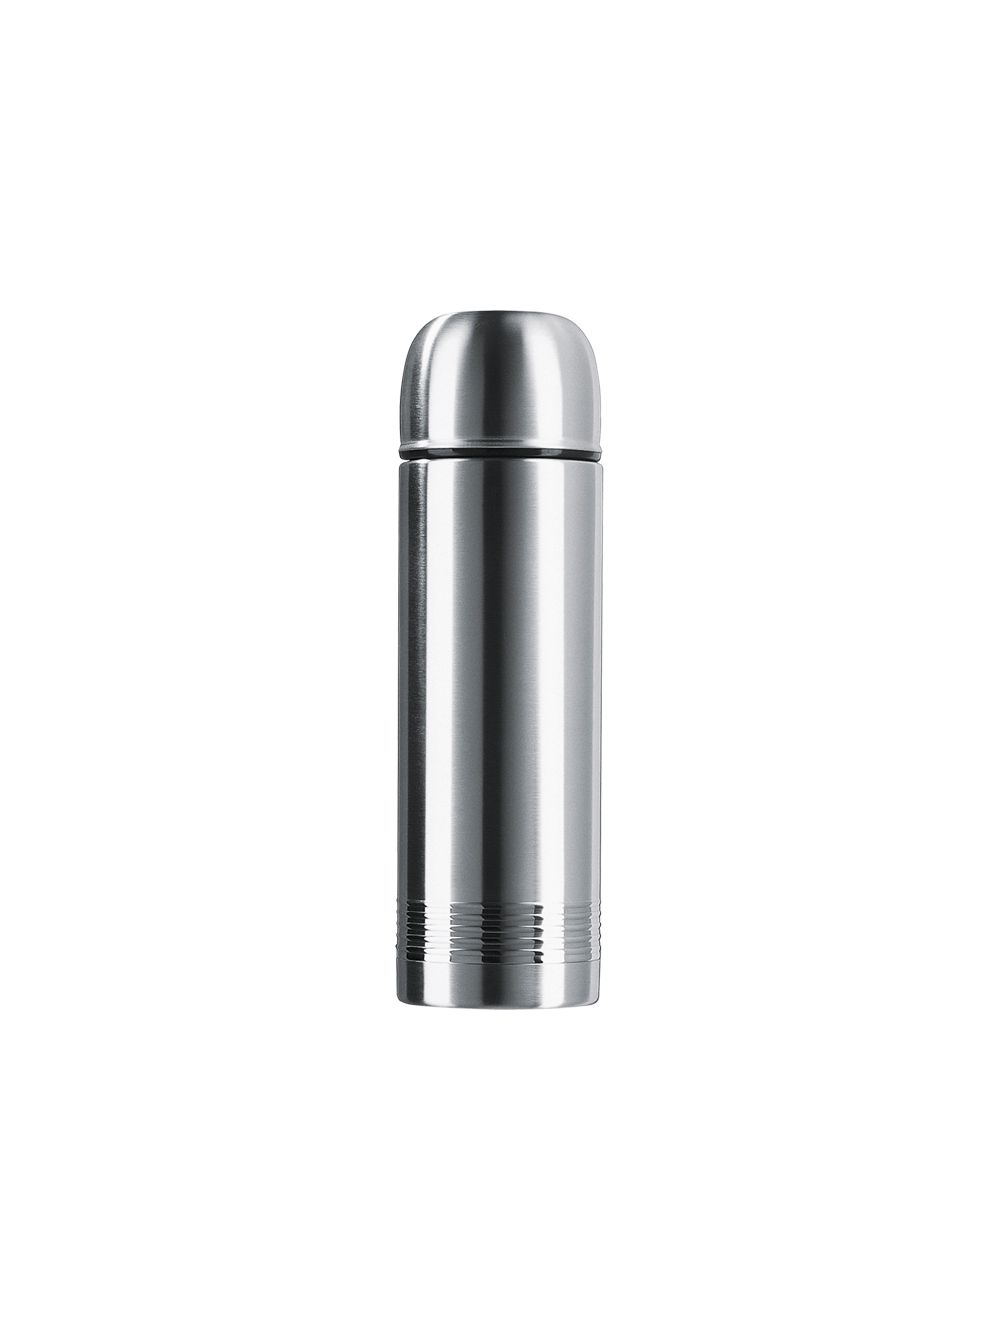 Senator Stainless Steel Insulated Flask - 350ml